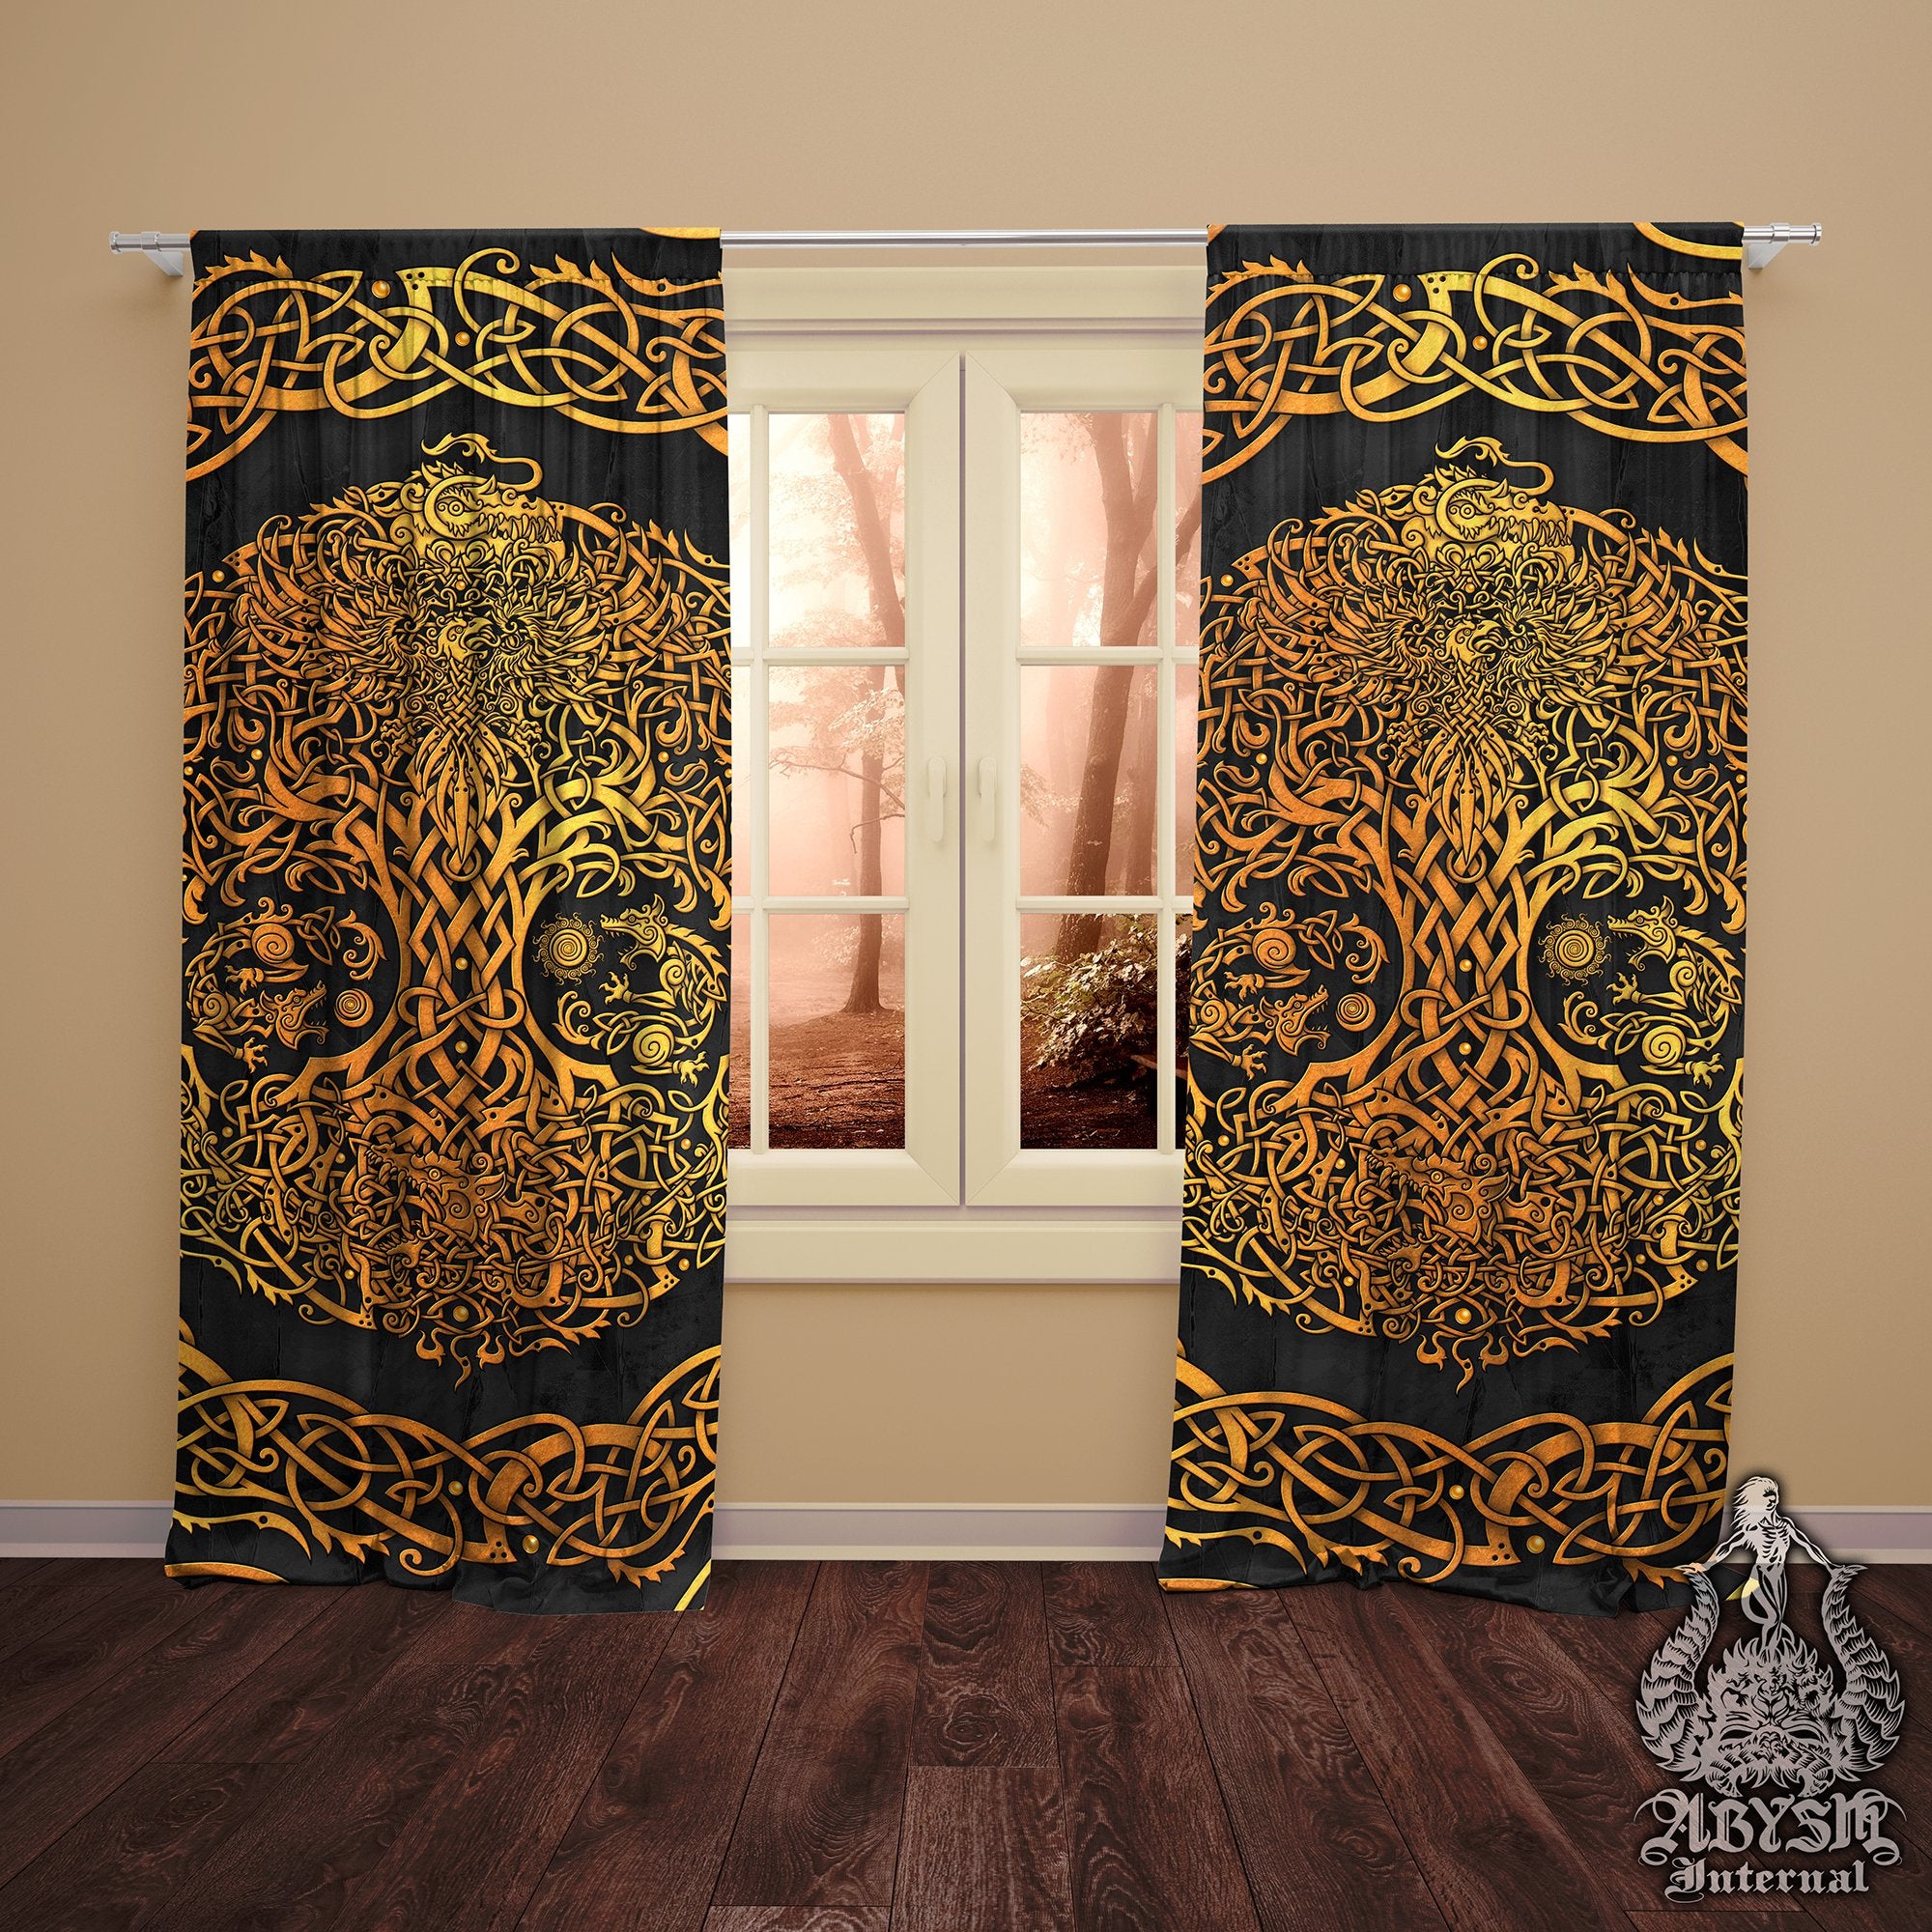 Viking Curtains, 50x84' Printed Window Panels, Gold Yggdrasil, Nordic Tree of Life, Pagan Room Decor, Art Print - 3 Colors - Abysm Internal